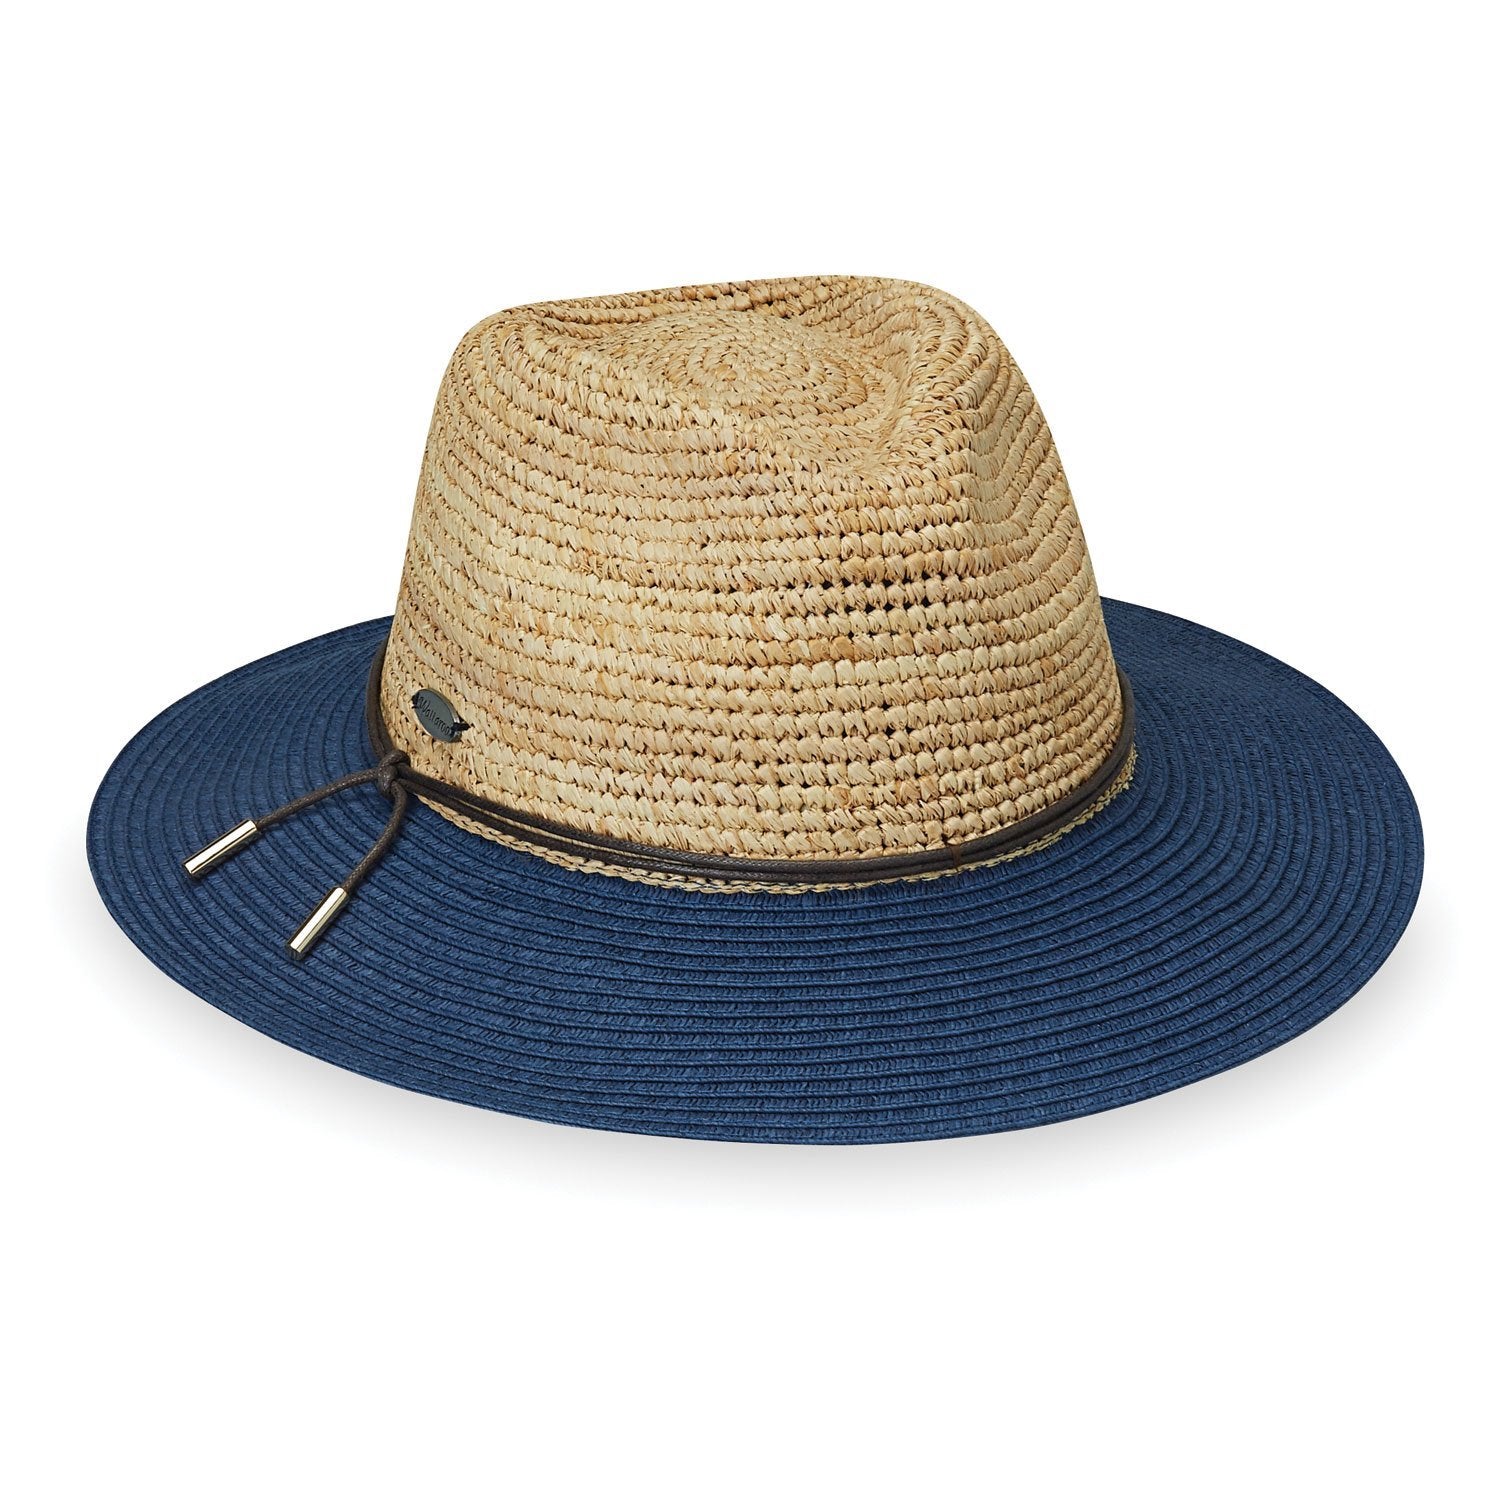 Featuring Women's Fedora Style Laguna Straw Sun Hat in Natural Navy from Wallaroo